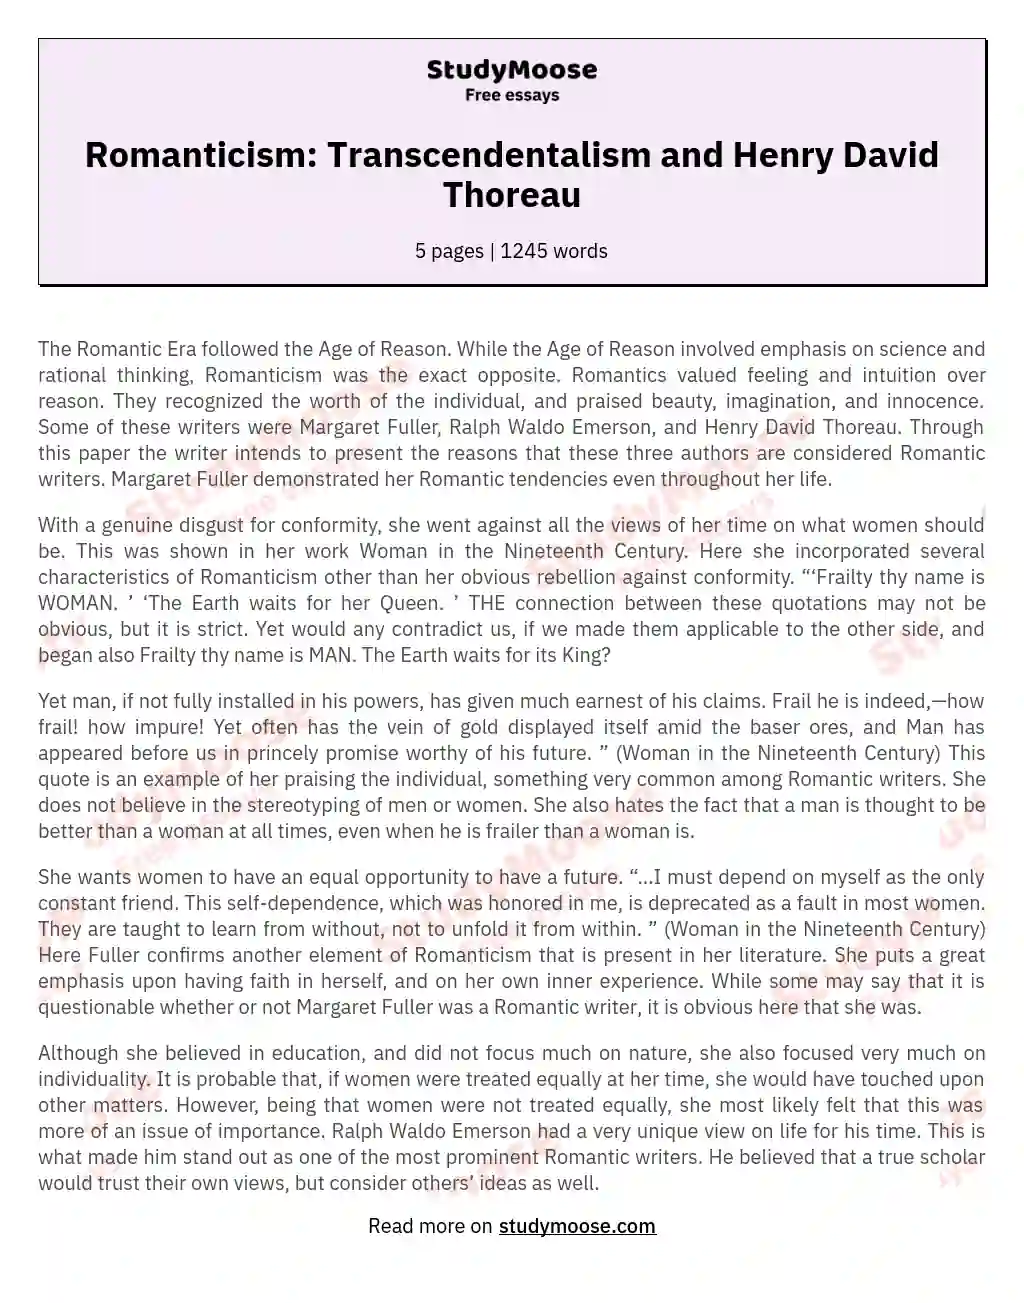 Romanticism: Transcendentalism and Henry David Thoreau